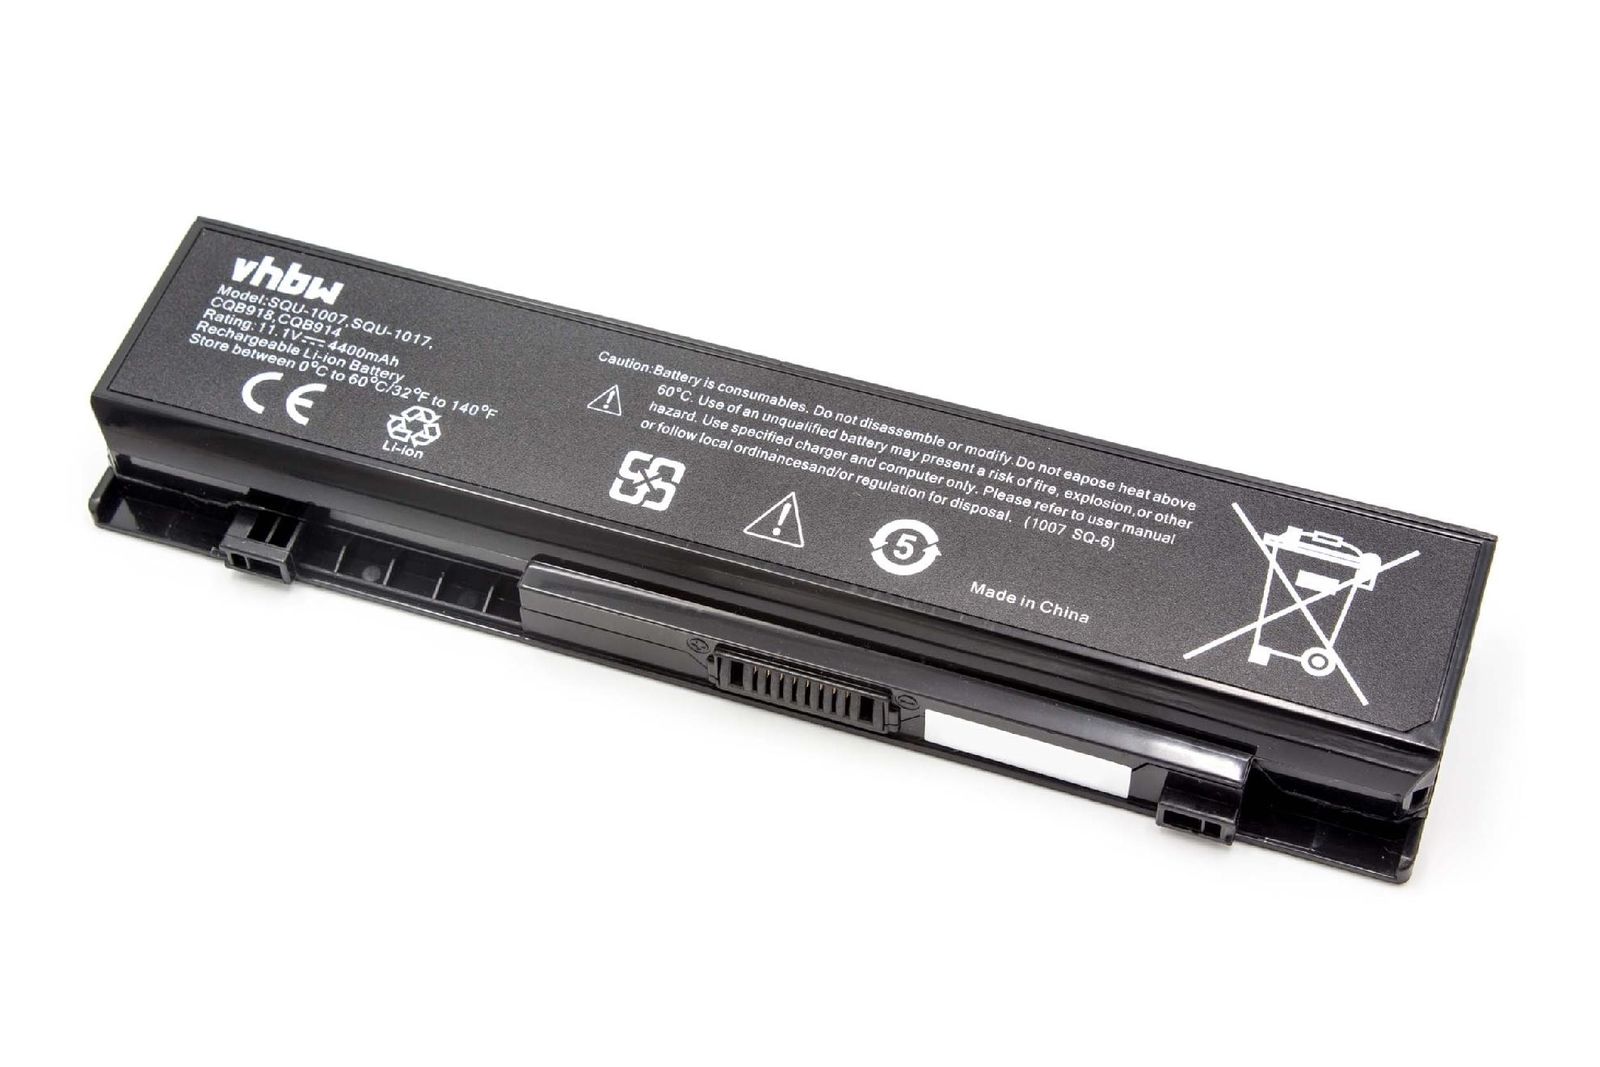 Bateria para LG SQU-1007 CQB914 CQB918 PD420 P420 S525 S425 S430 SQU-1017. XNOTE S535